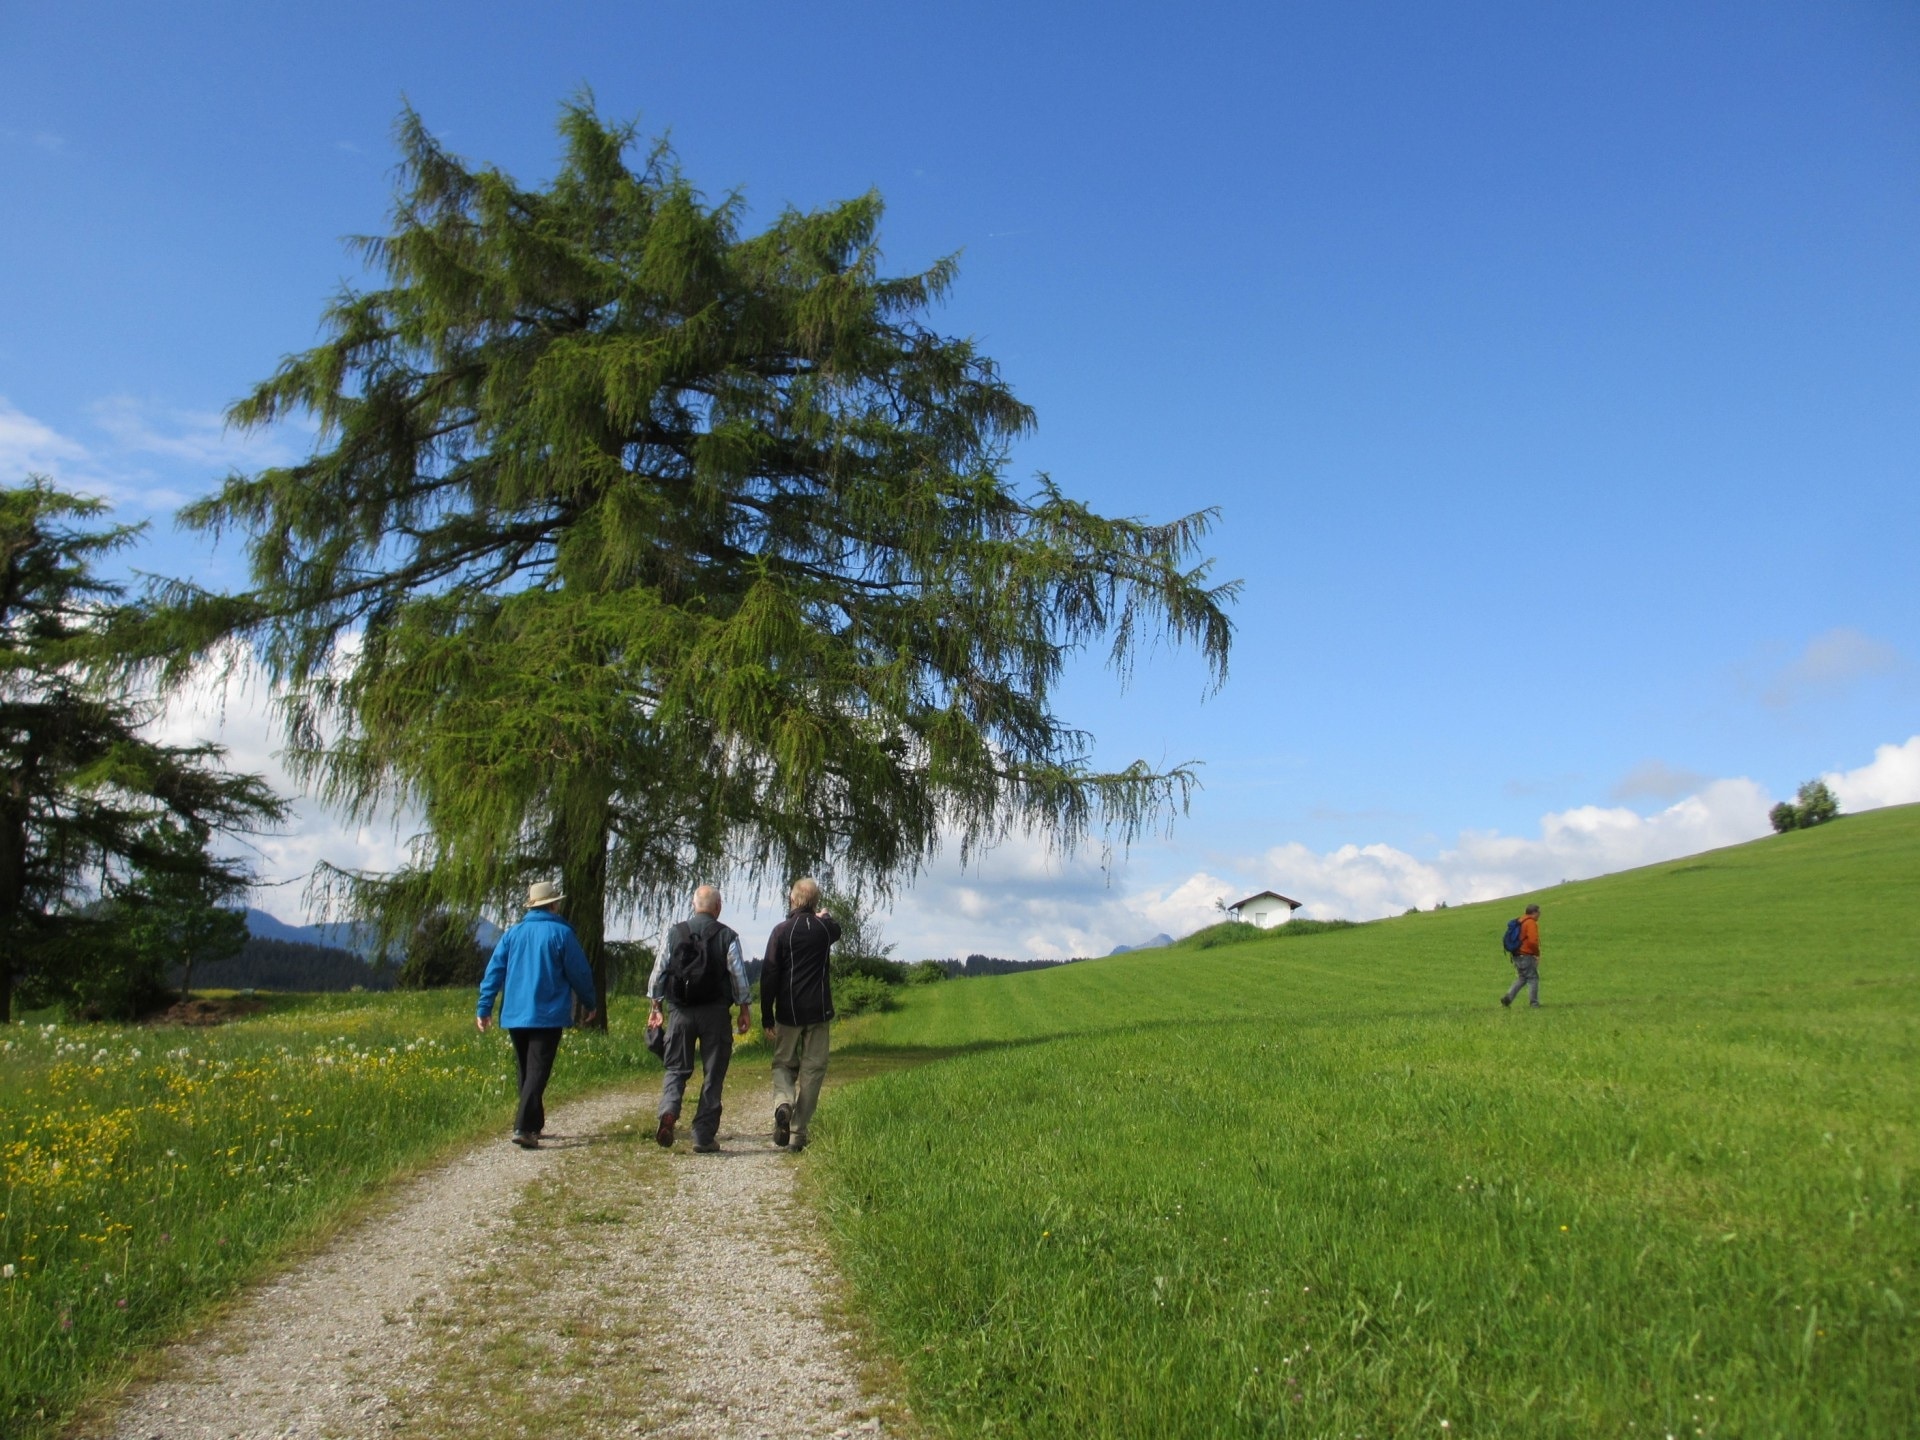 men walking on dirt road between green grass field during daytime